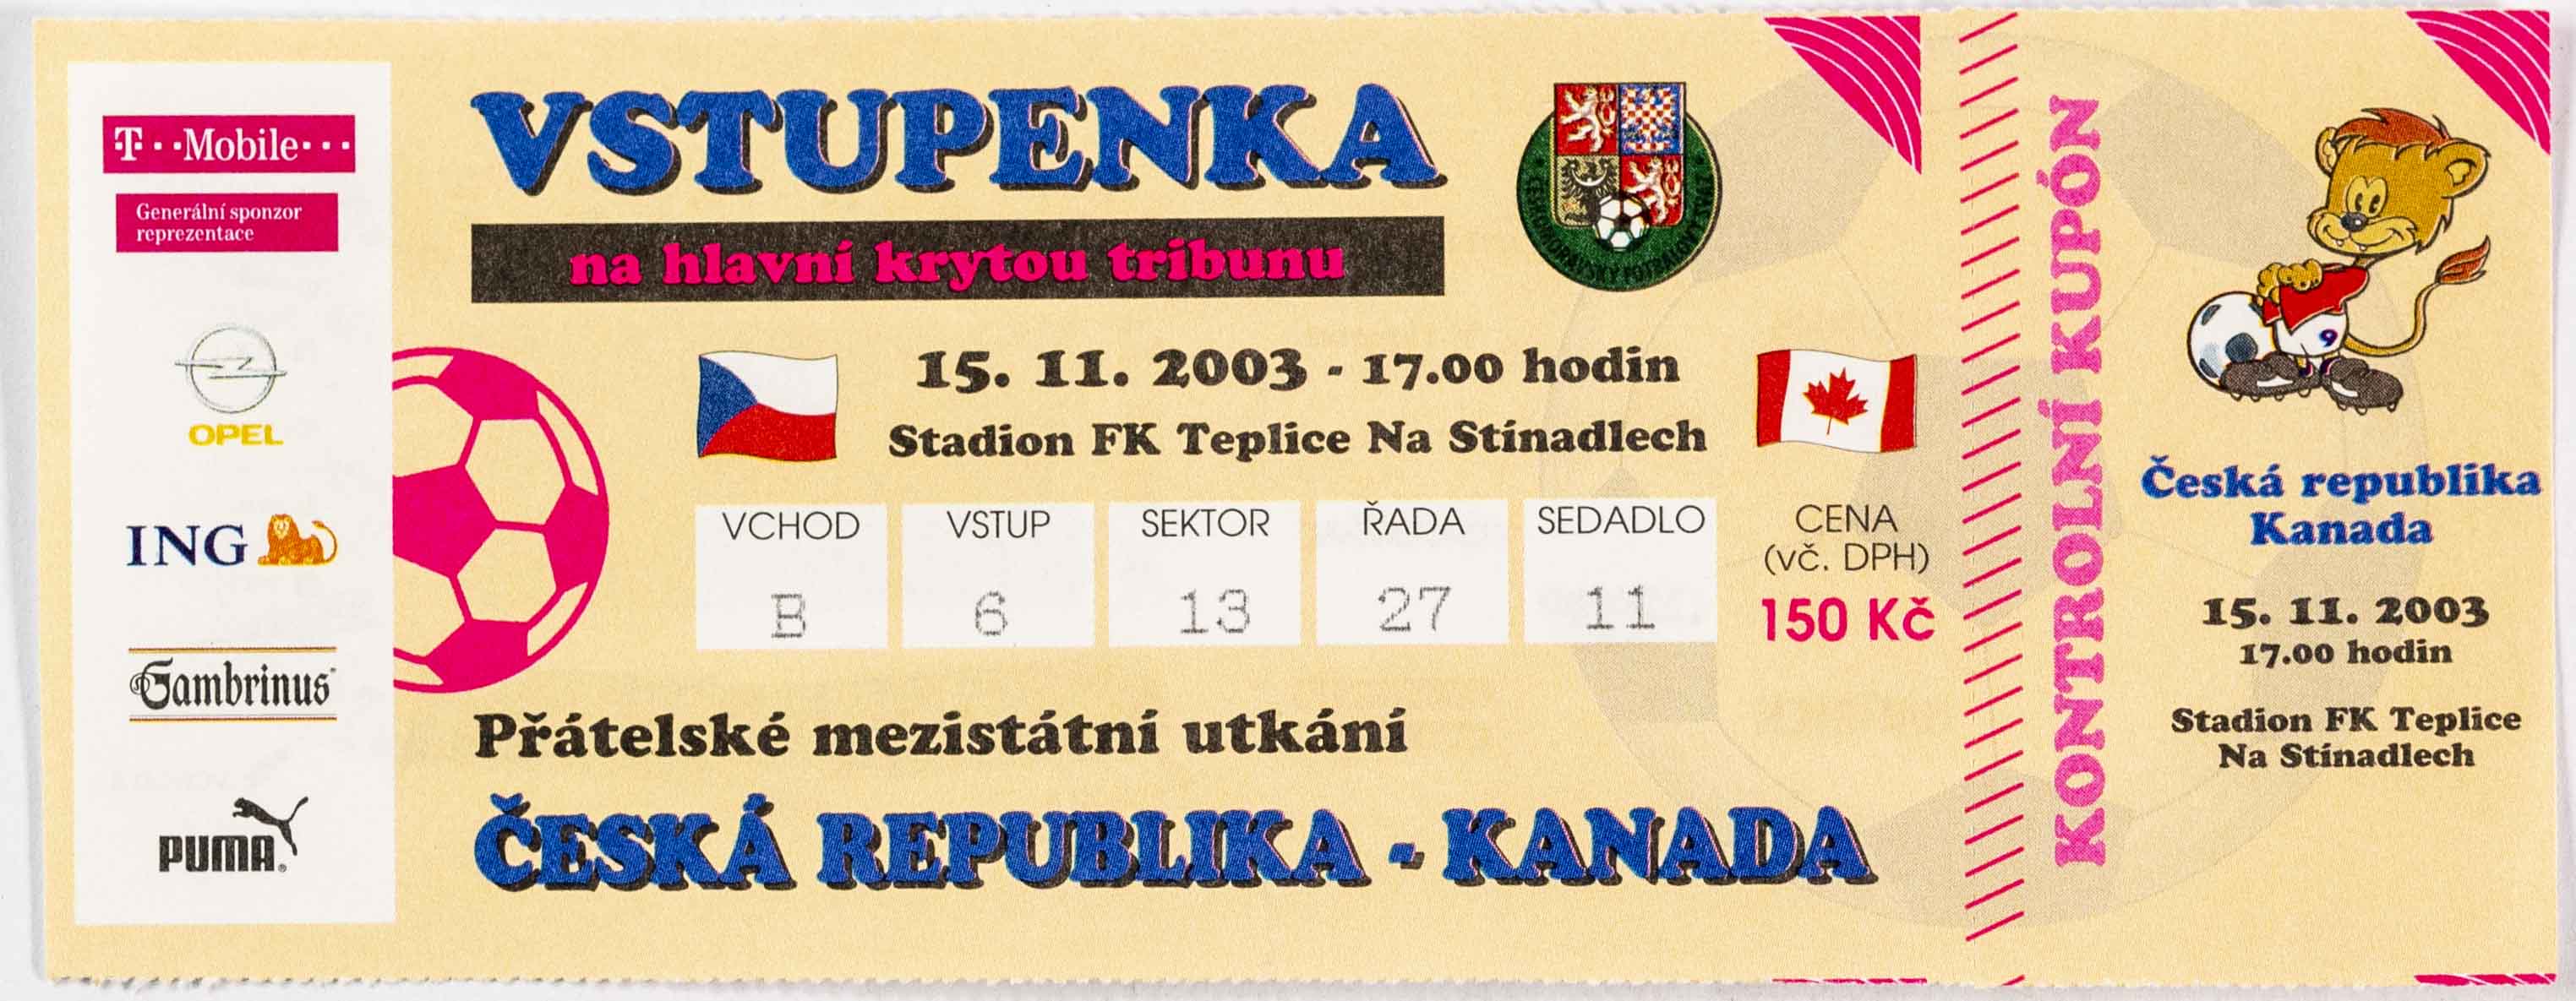 Vstupenka fotbal , ČR v. Kanada, 2003, 2